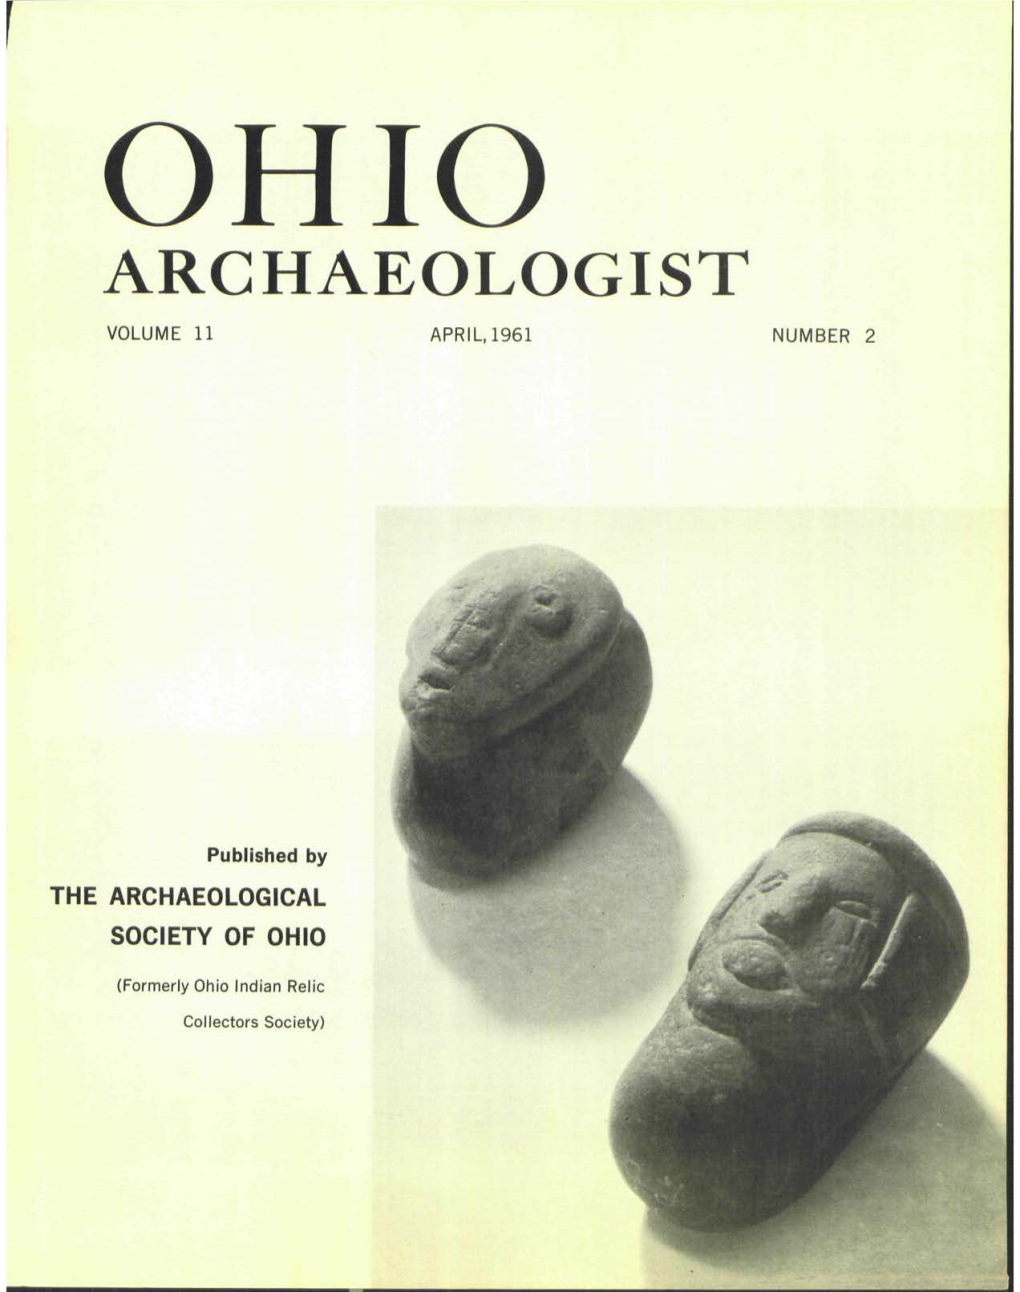 Archaeologist Volume 11 April, 1961 Number 2